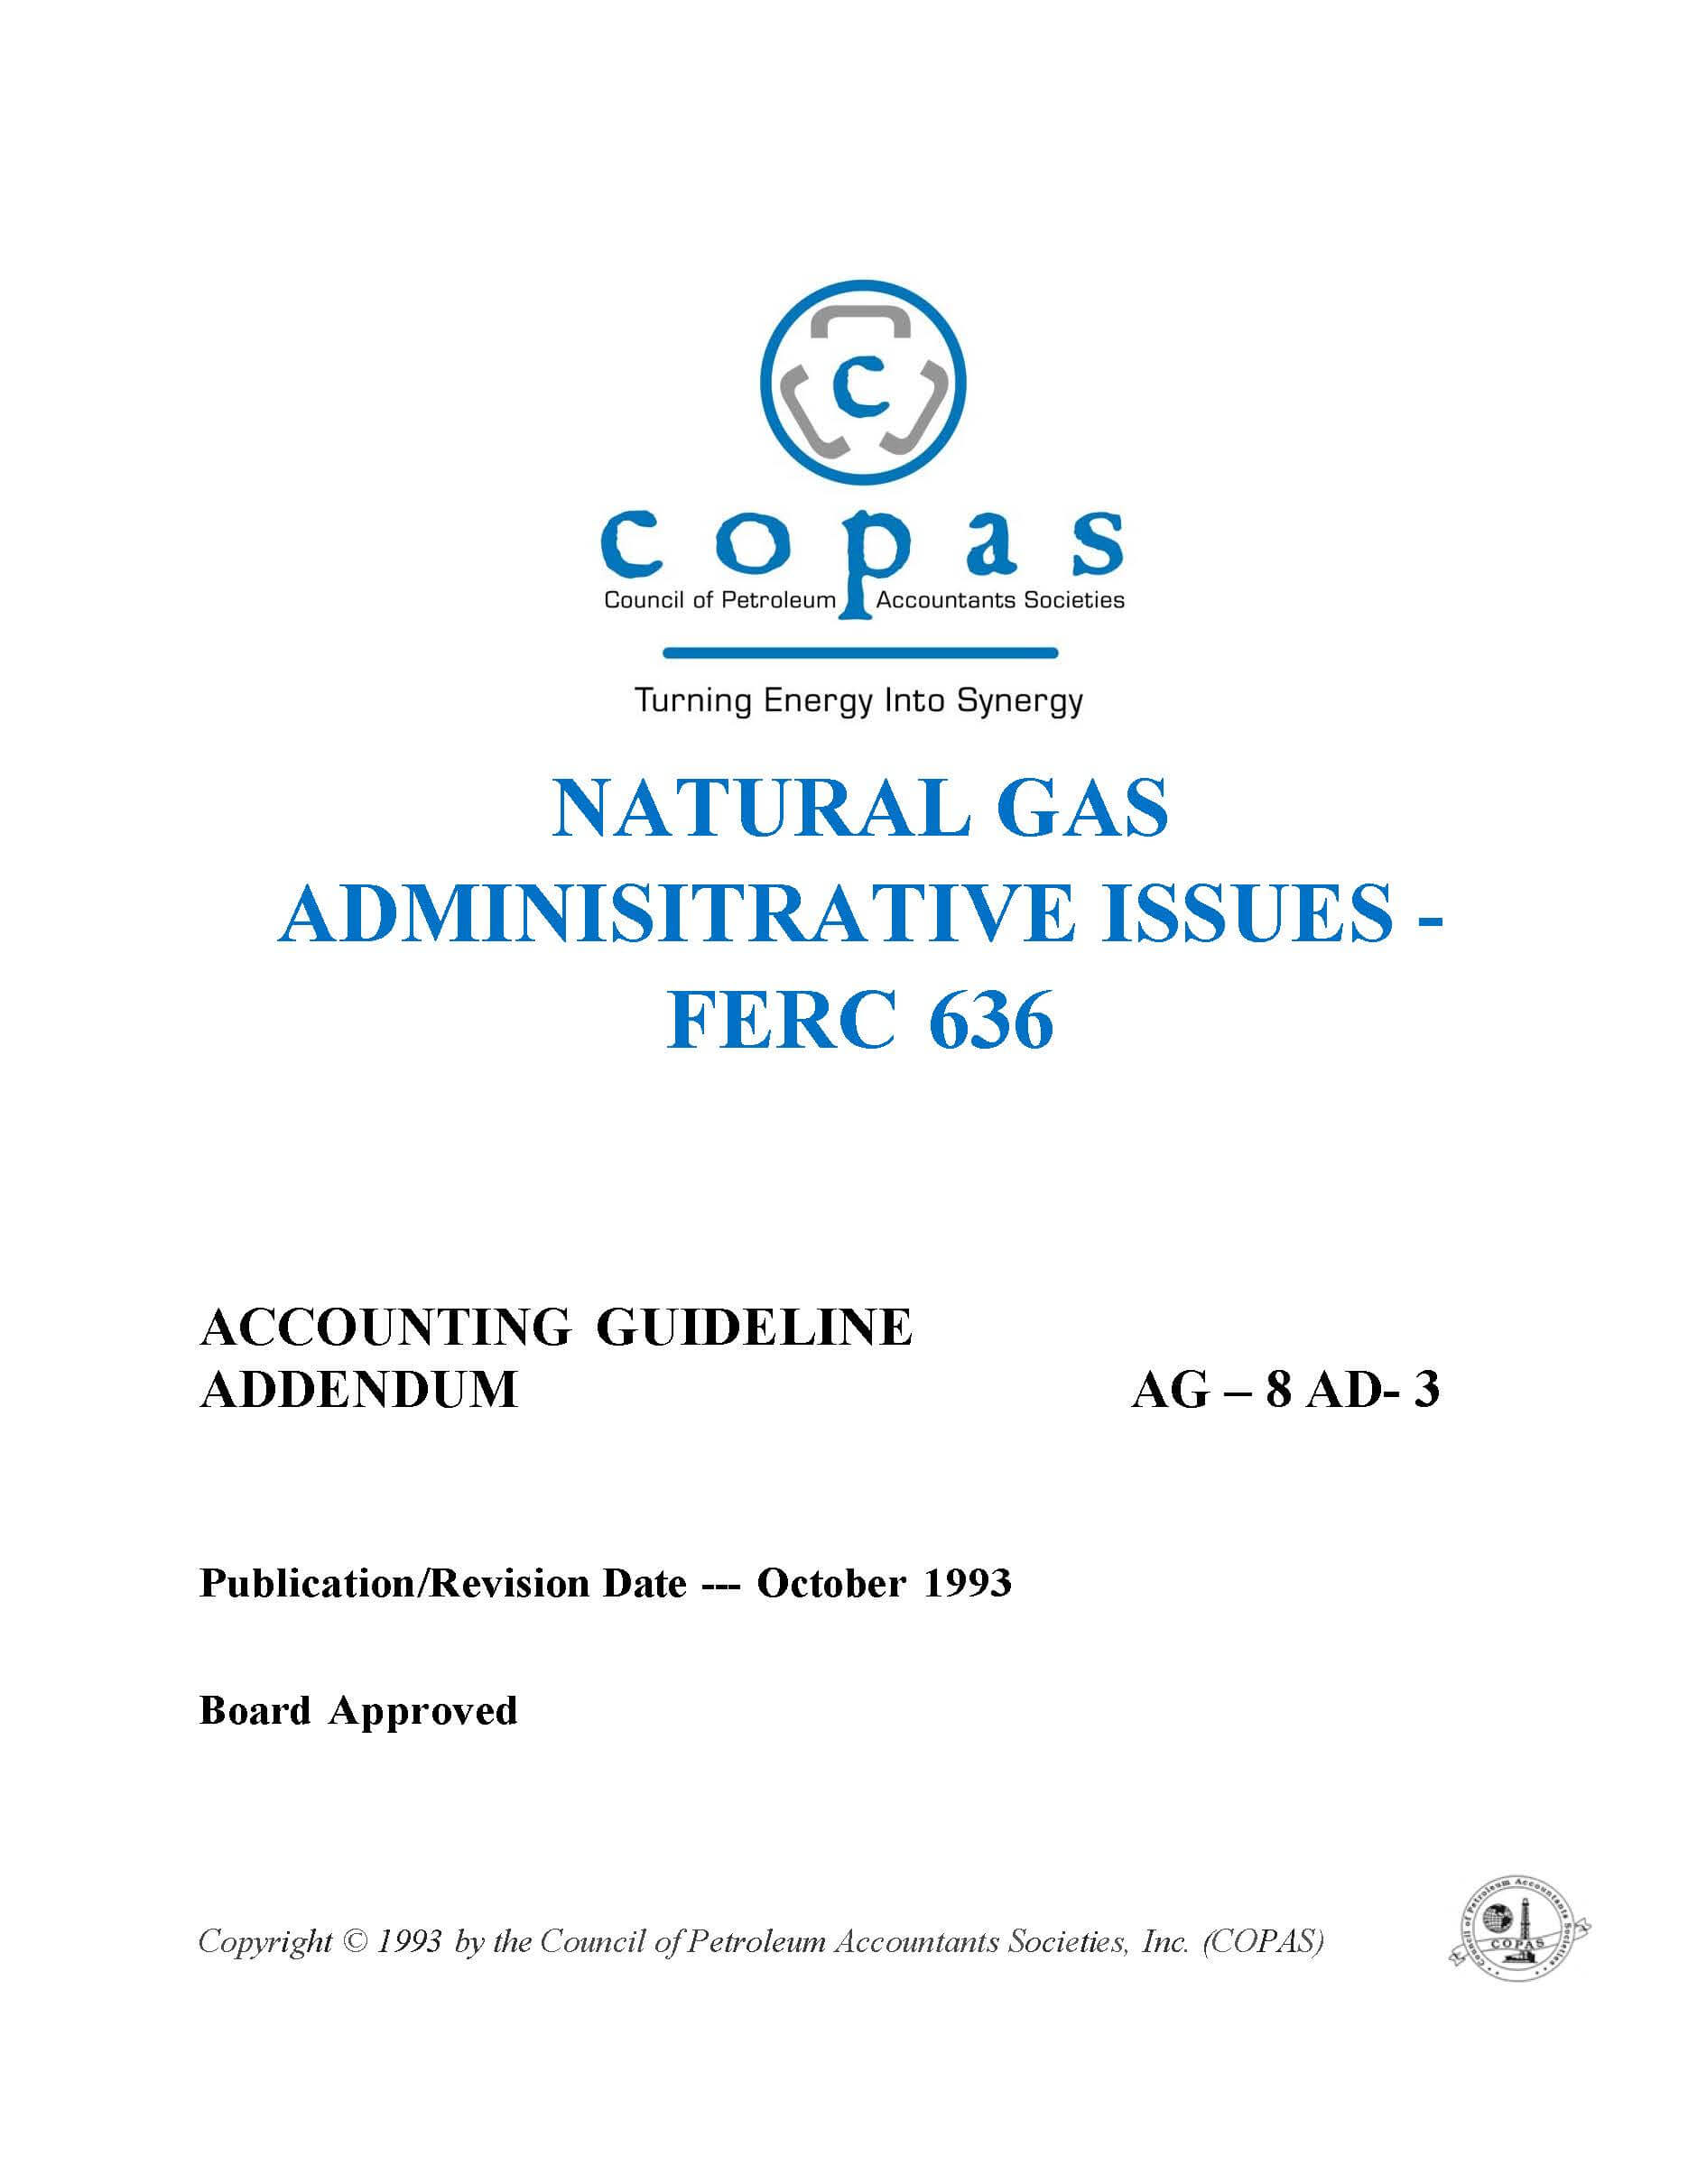 AG-8 AD-3 Natural Gas Administrative Issues – FERC 636